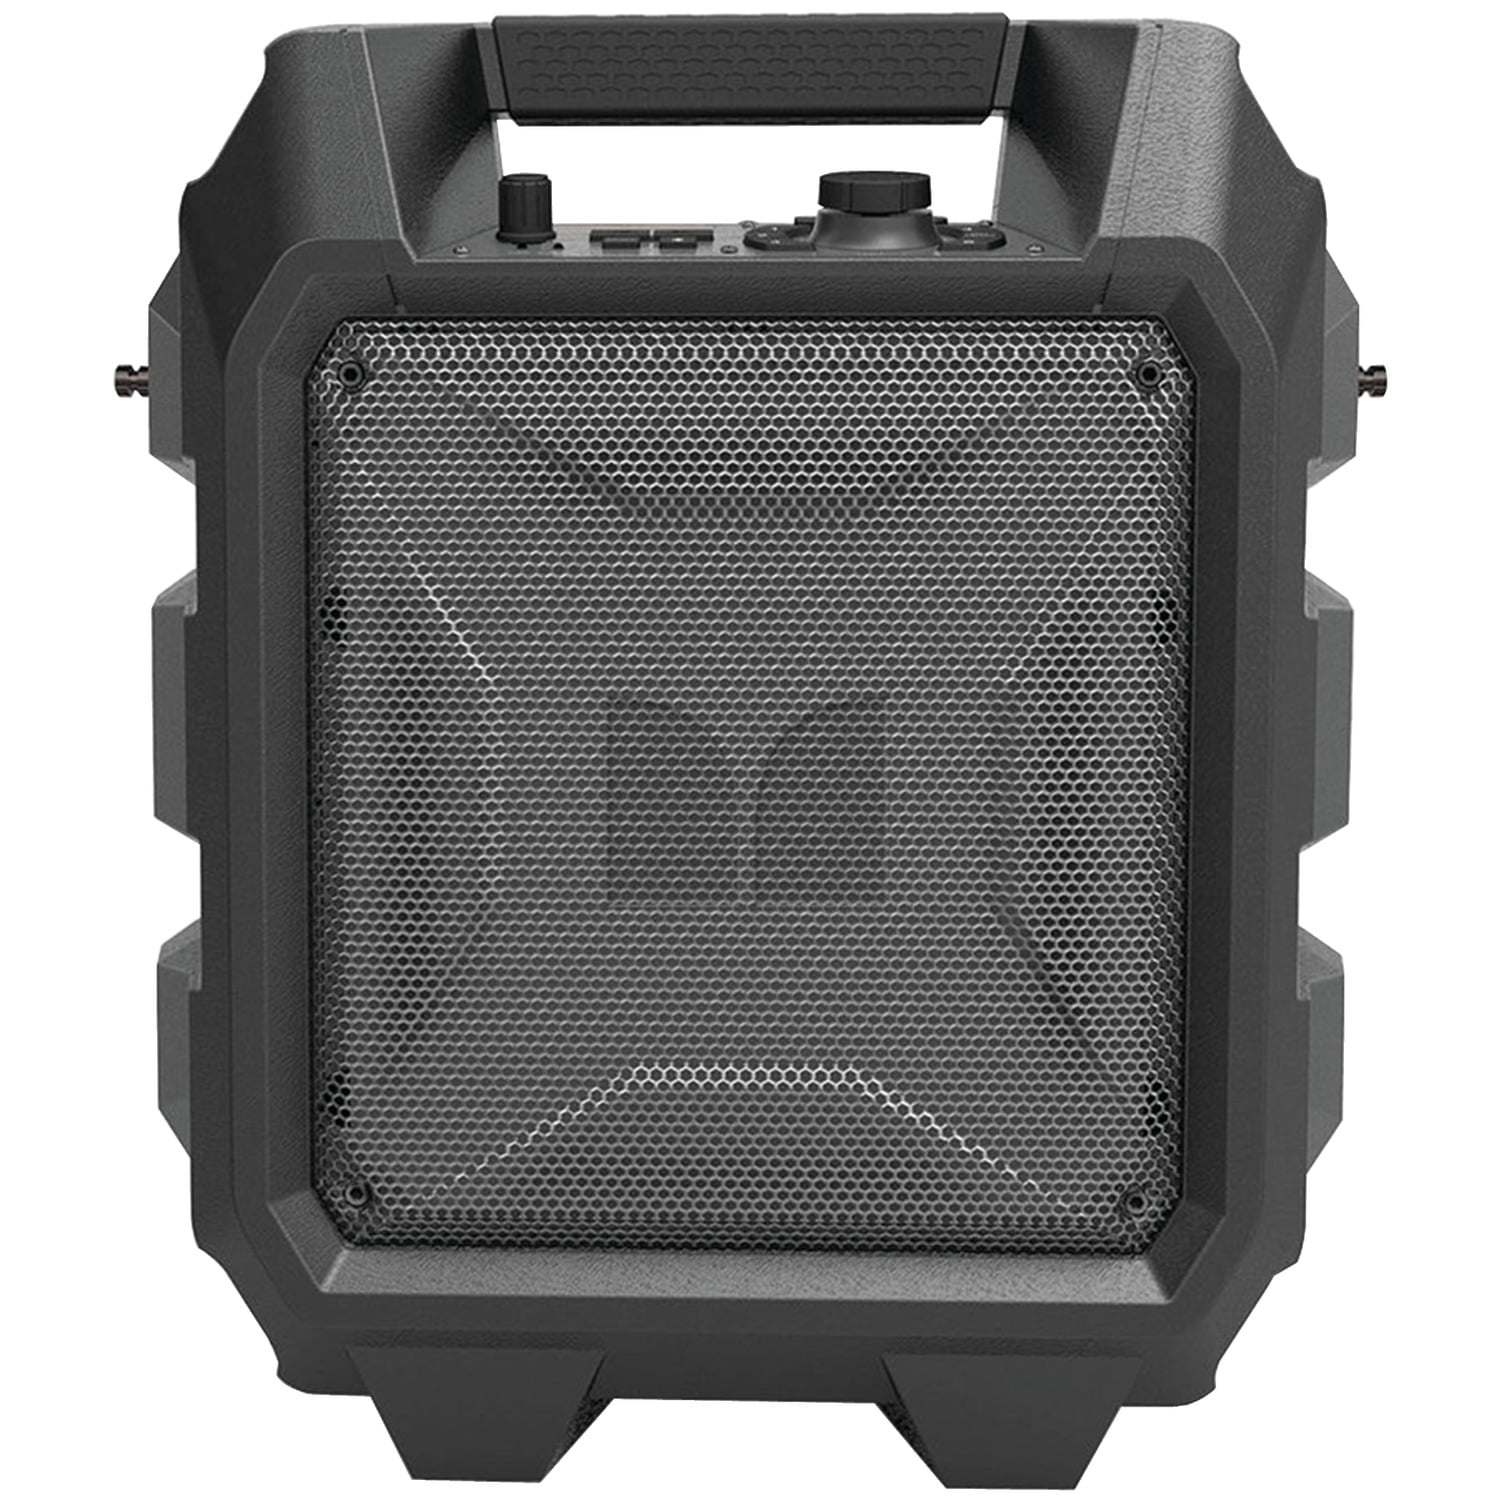 Monster Digital Portable Bluetooth Speaker w/ FM Transmitter (Black) $69.00 + Free Shipping